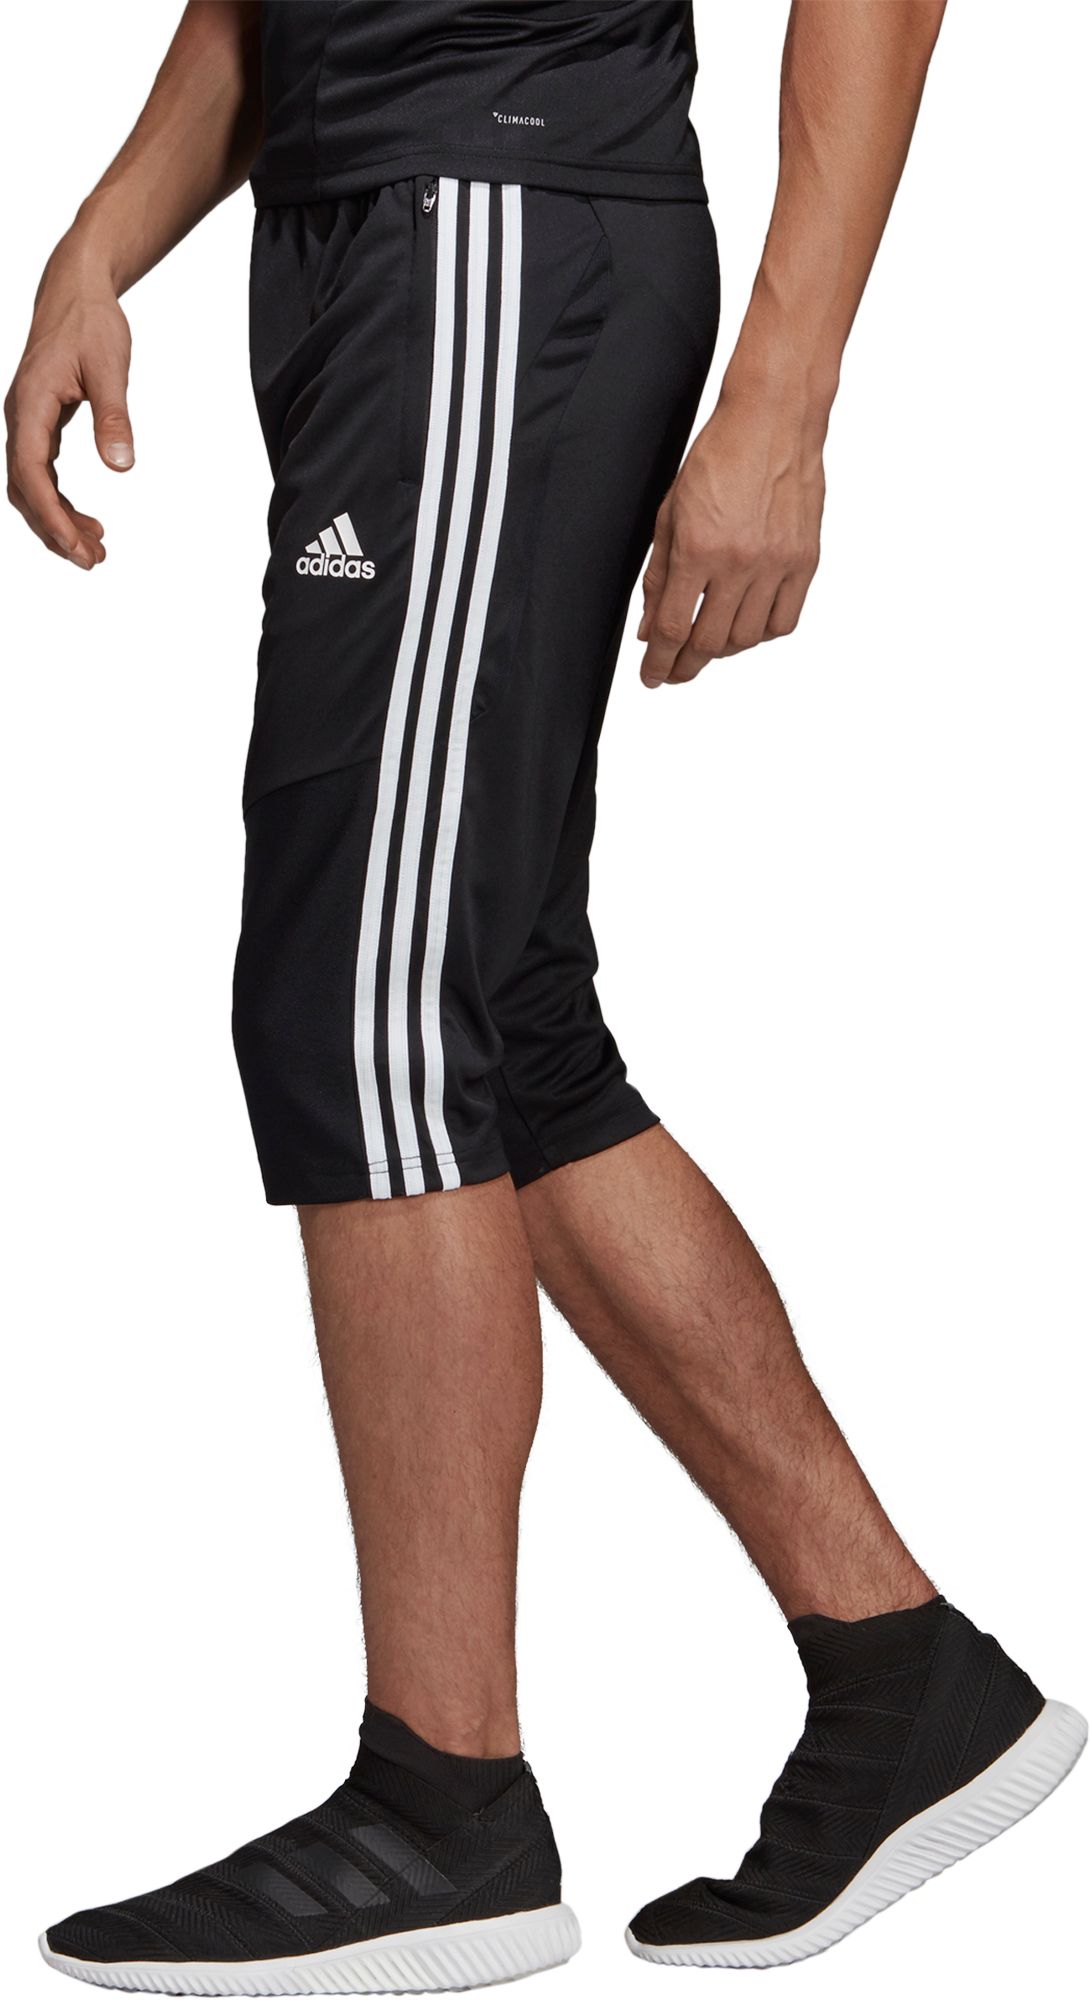 adidas soccer pants tall